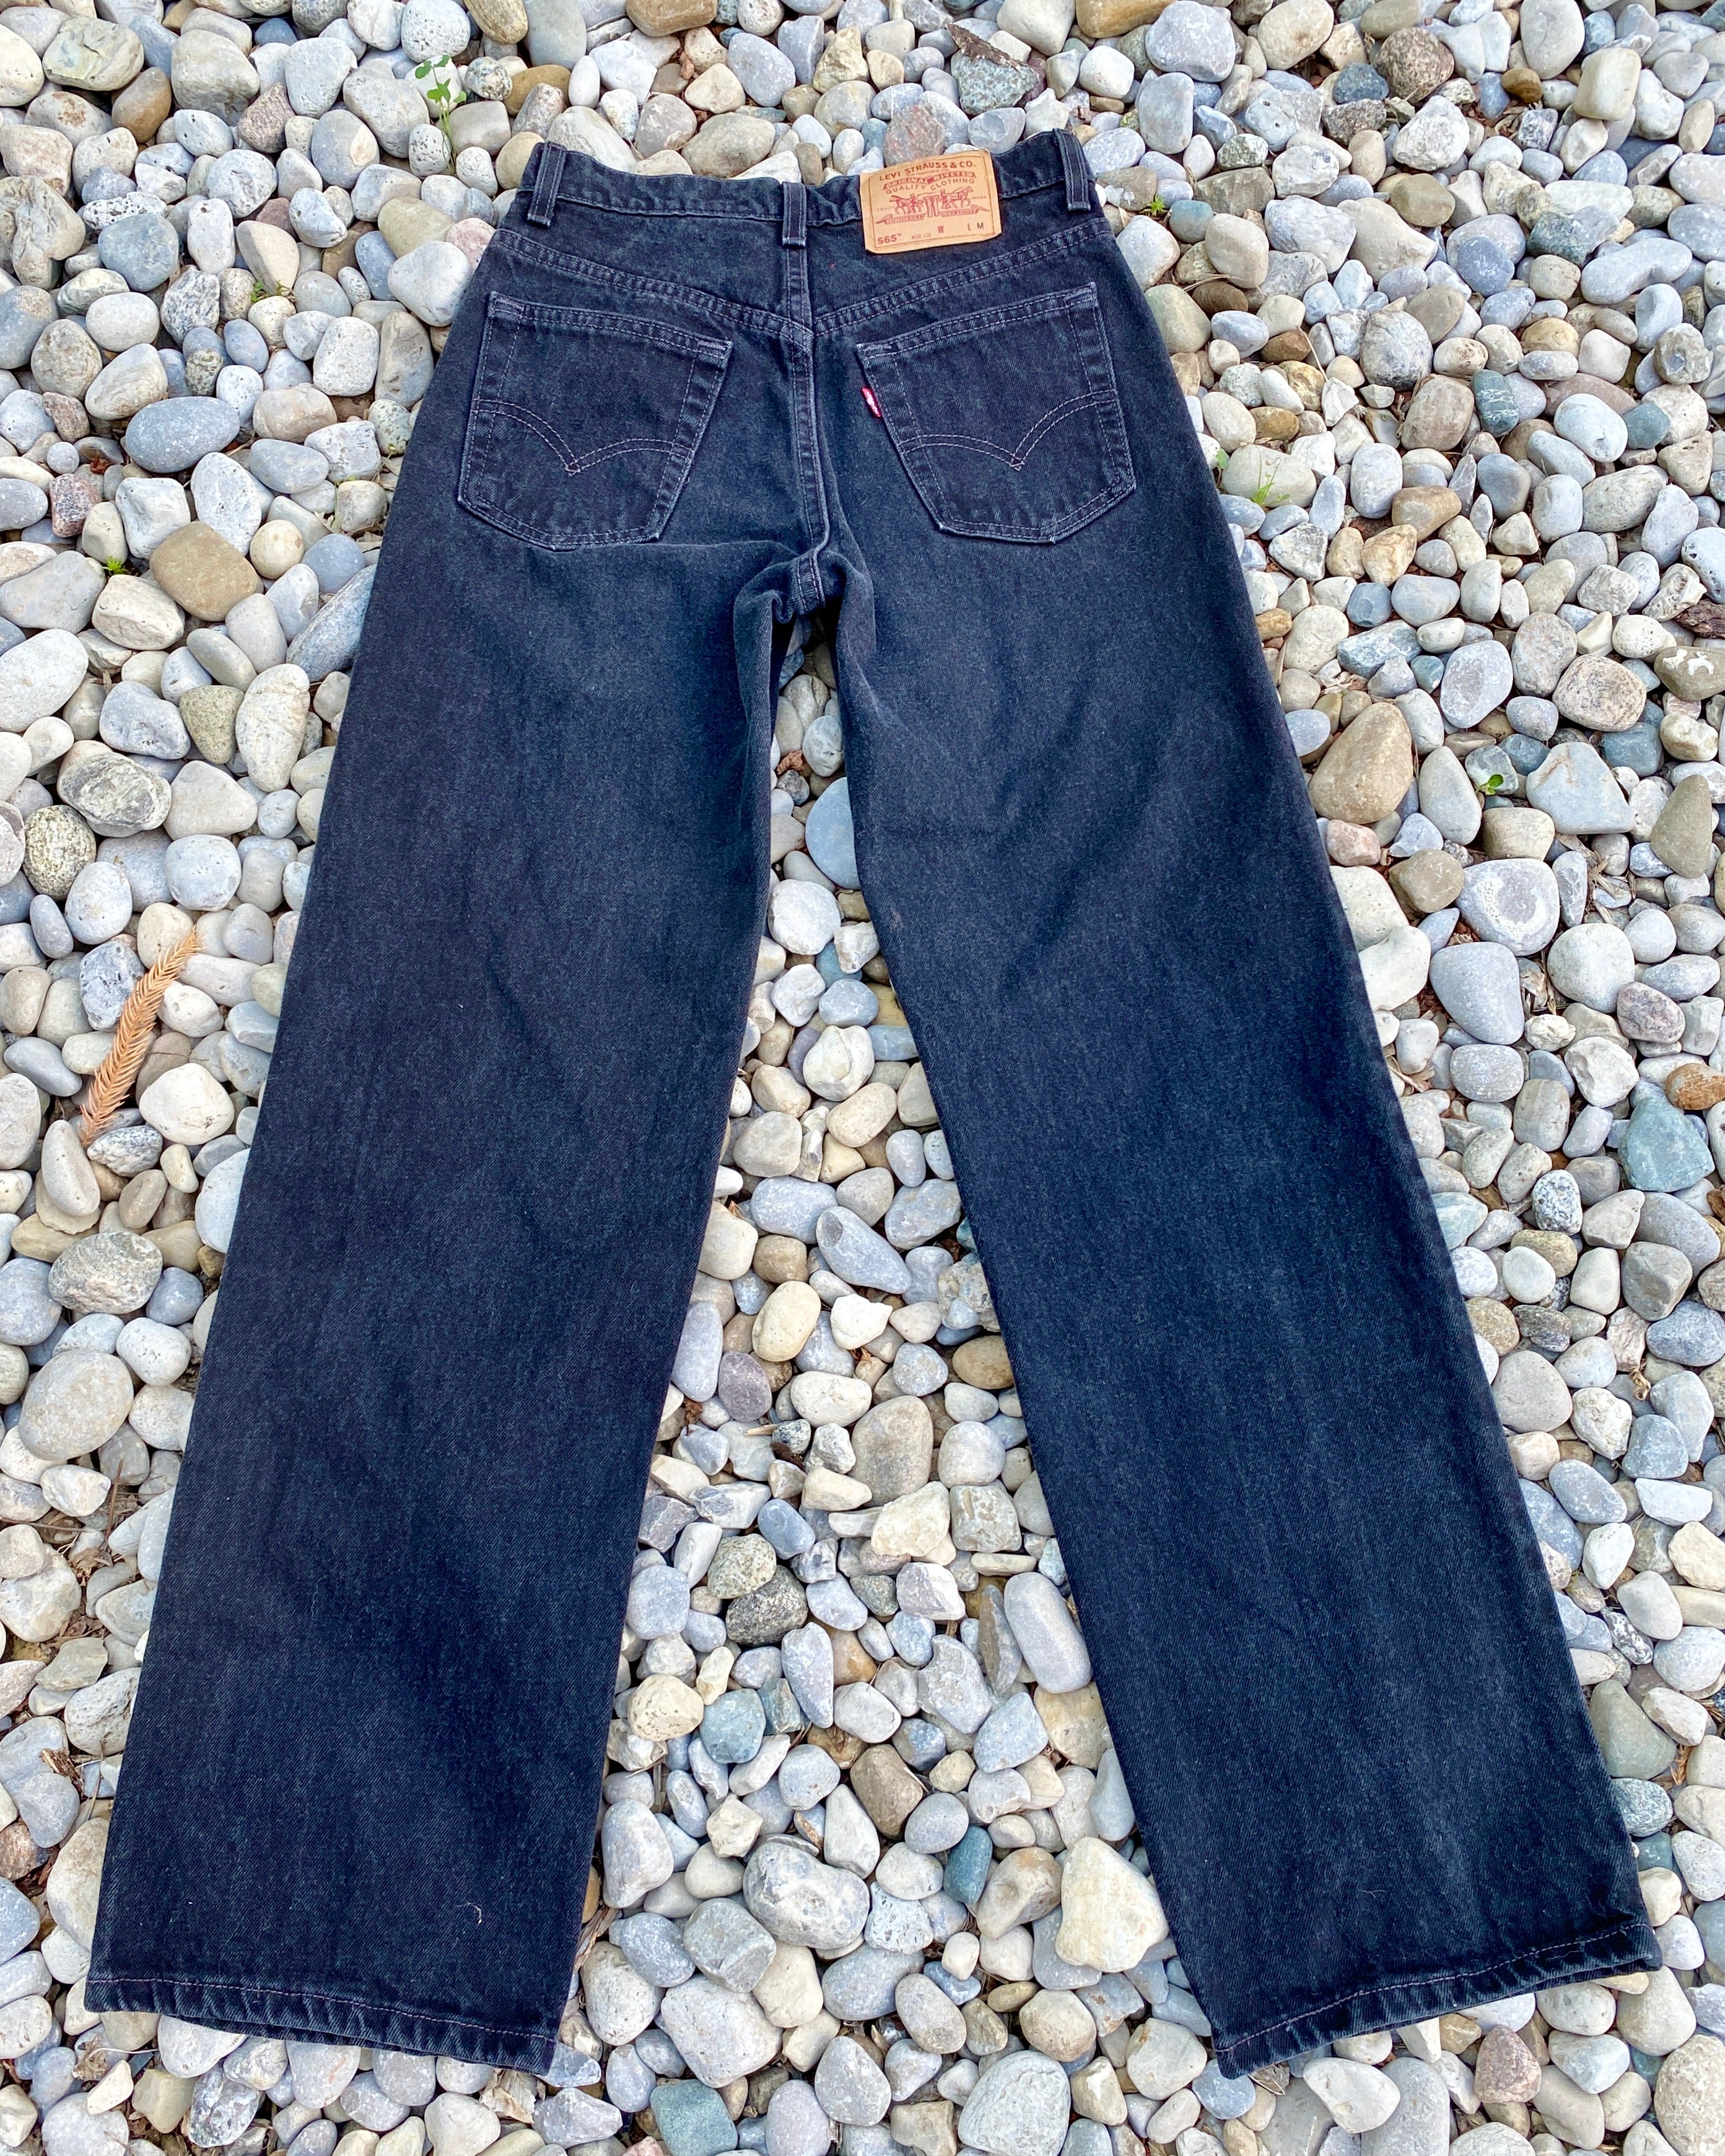 Vintage Levis 565 Black Wash Jeans size 28 USA